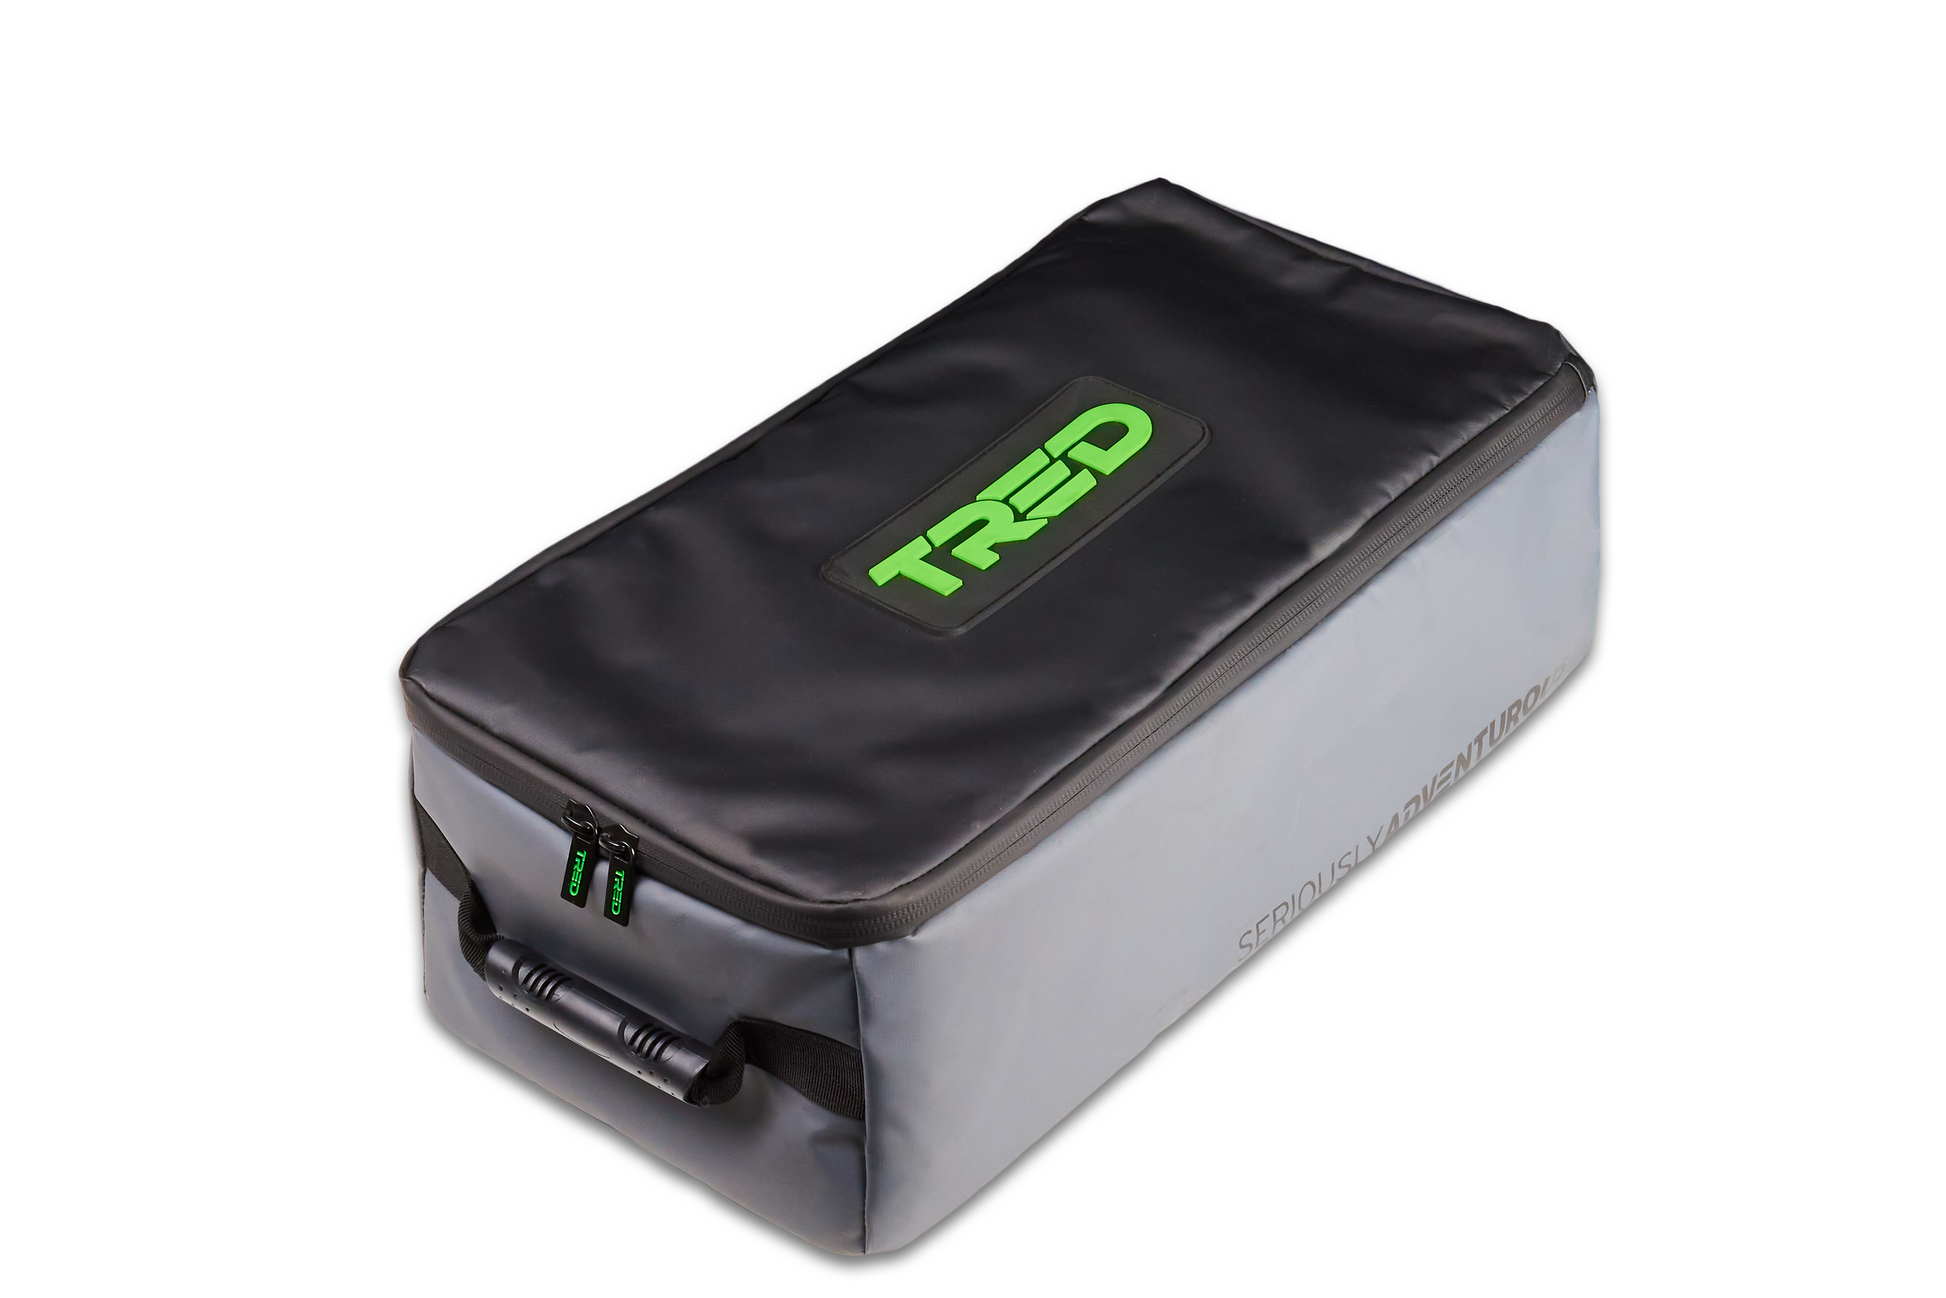 TRED - TRED GT Storage Bag Medium -